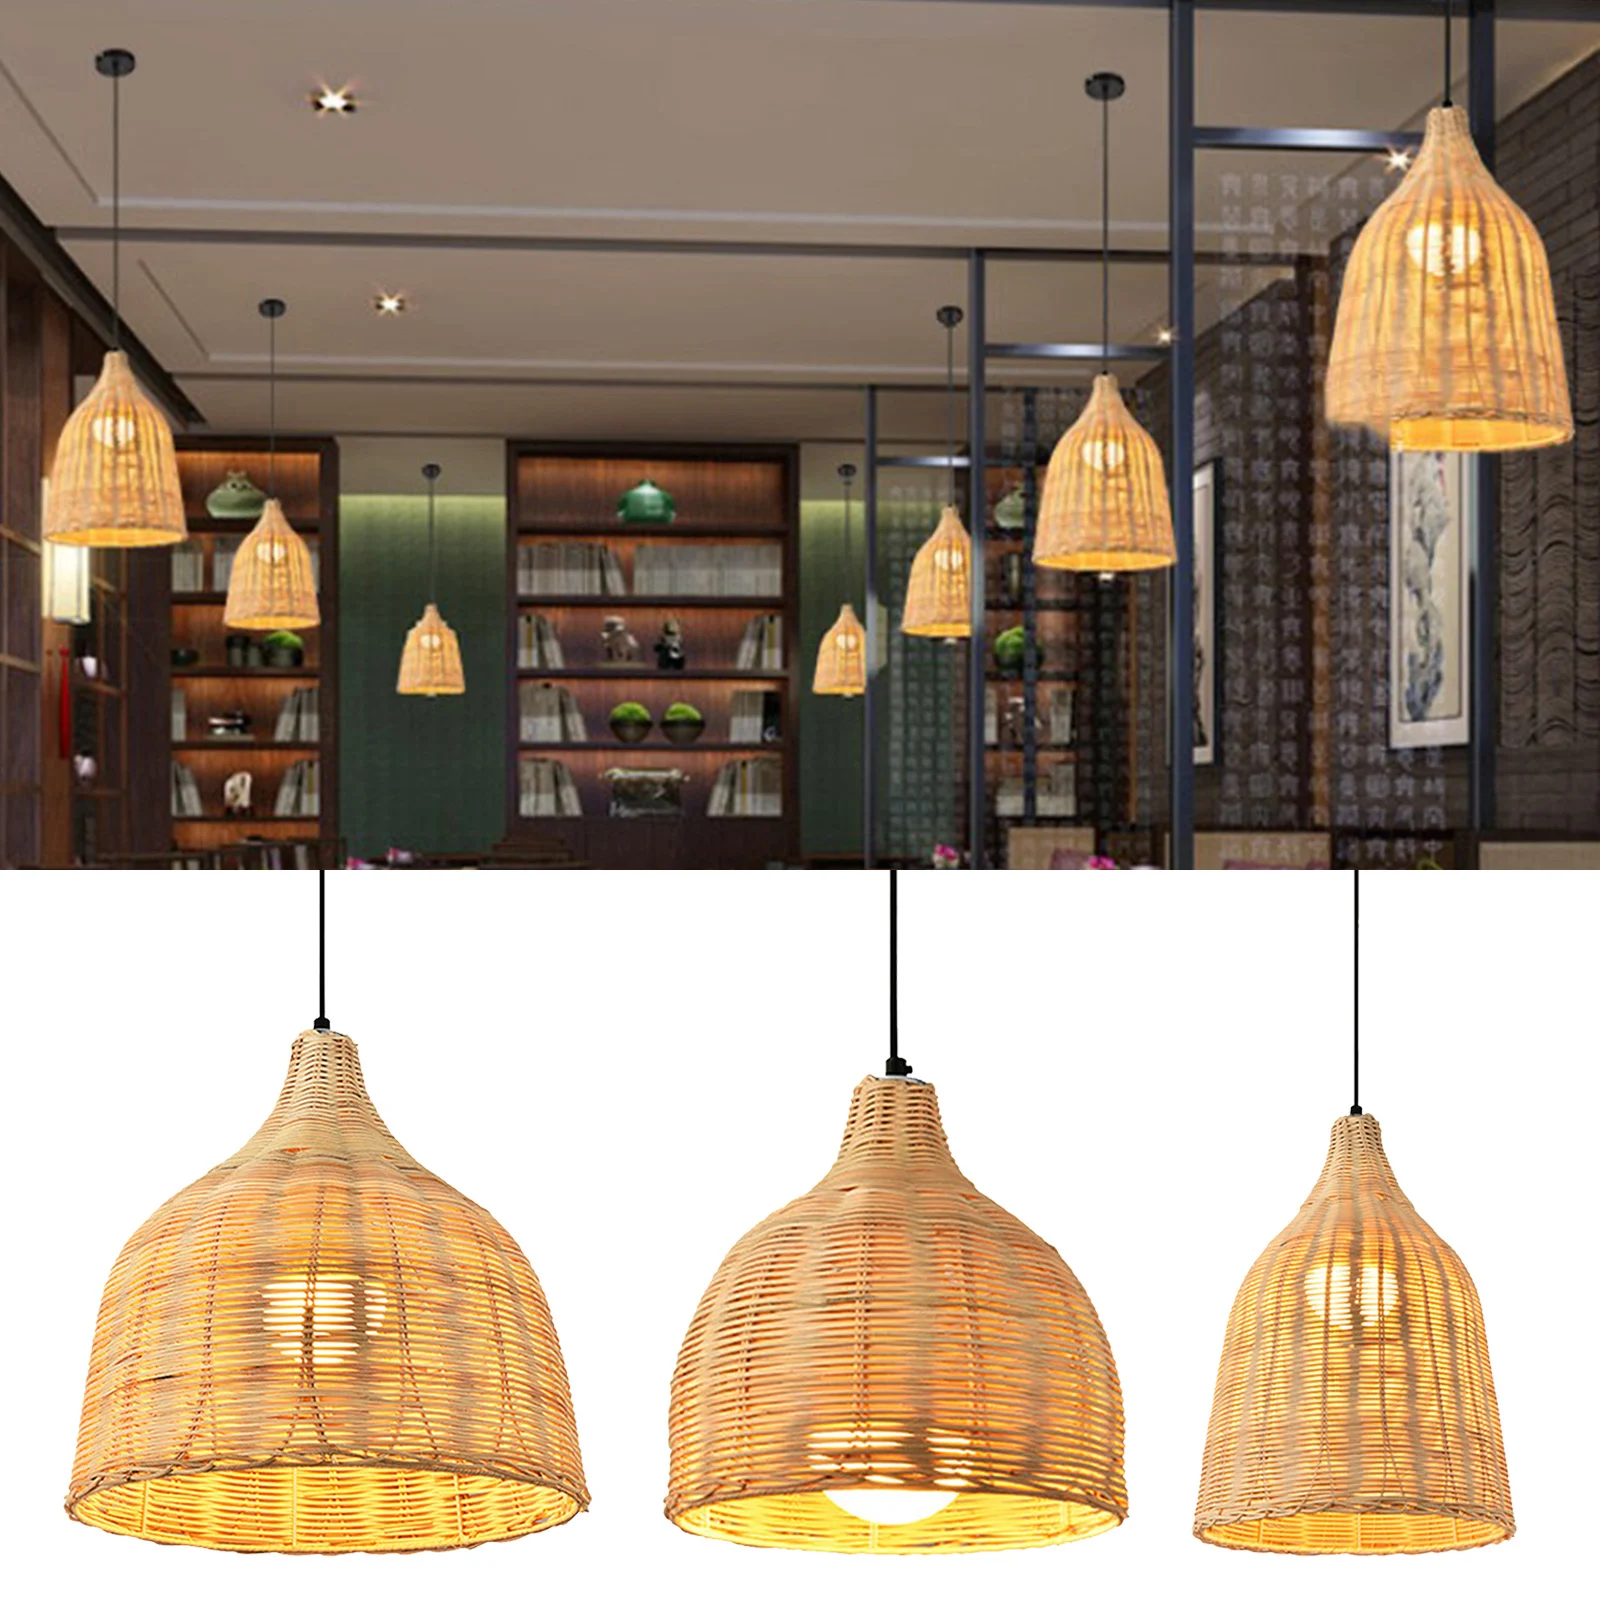 Modern Rattan Woven Ceiling Light Fixture Pendant Lamp Chandelier For Living Room Hotel Restaurant Cafe Office Decorative